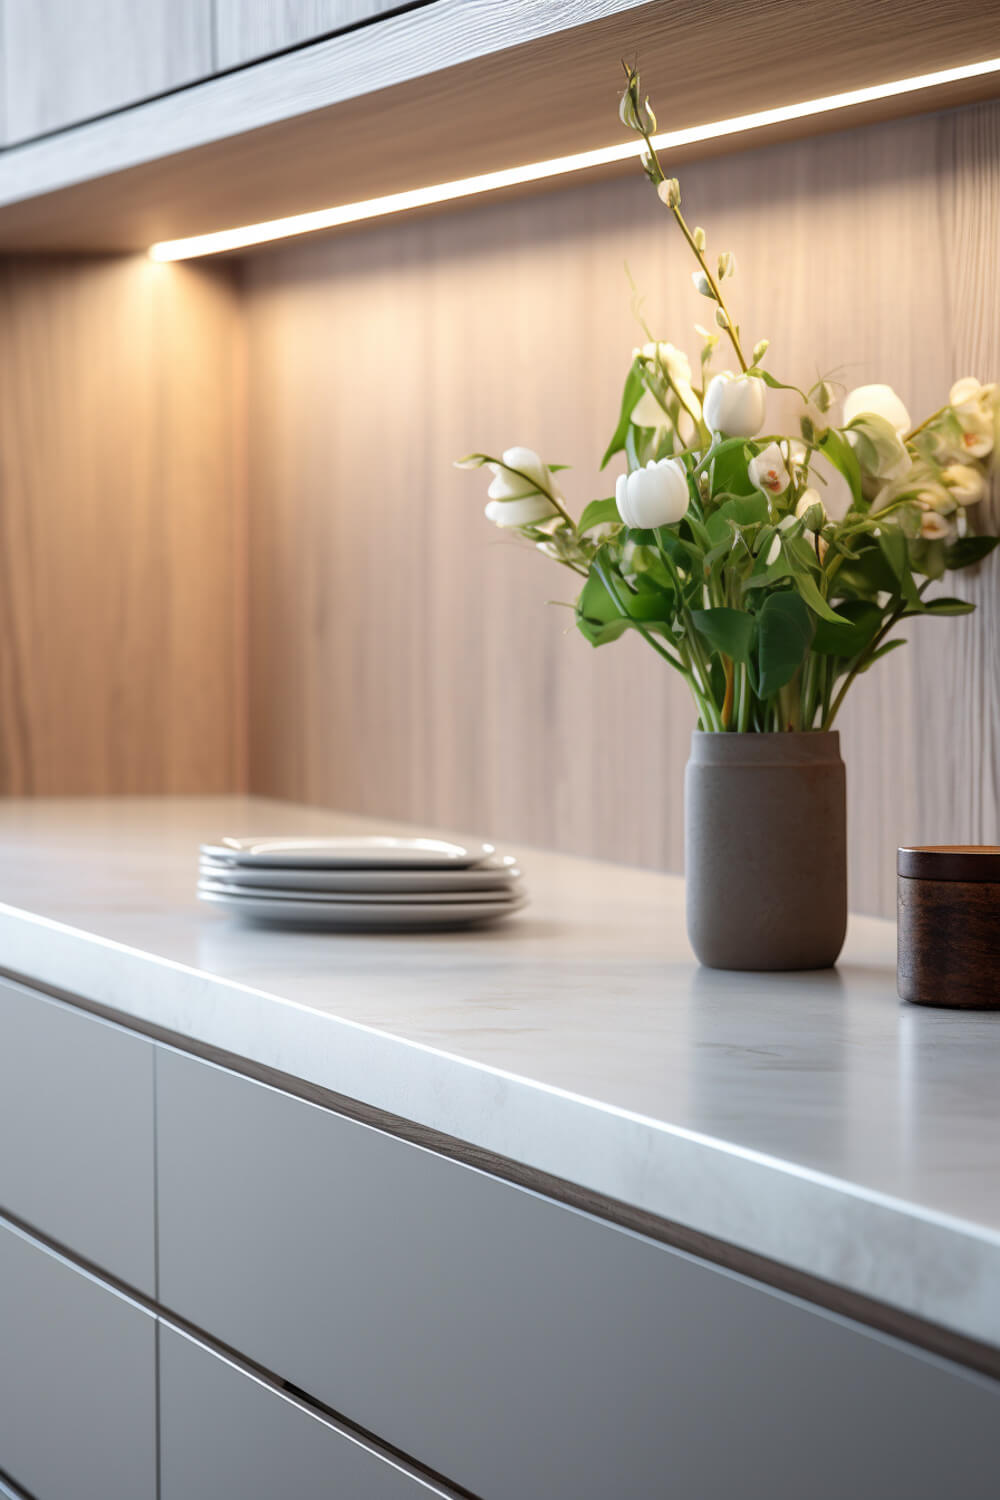 grey kitchen drawers without handles and quartz countertops, wood backsplash, transitional-modern style